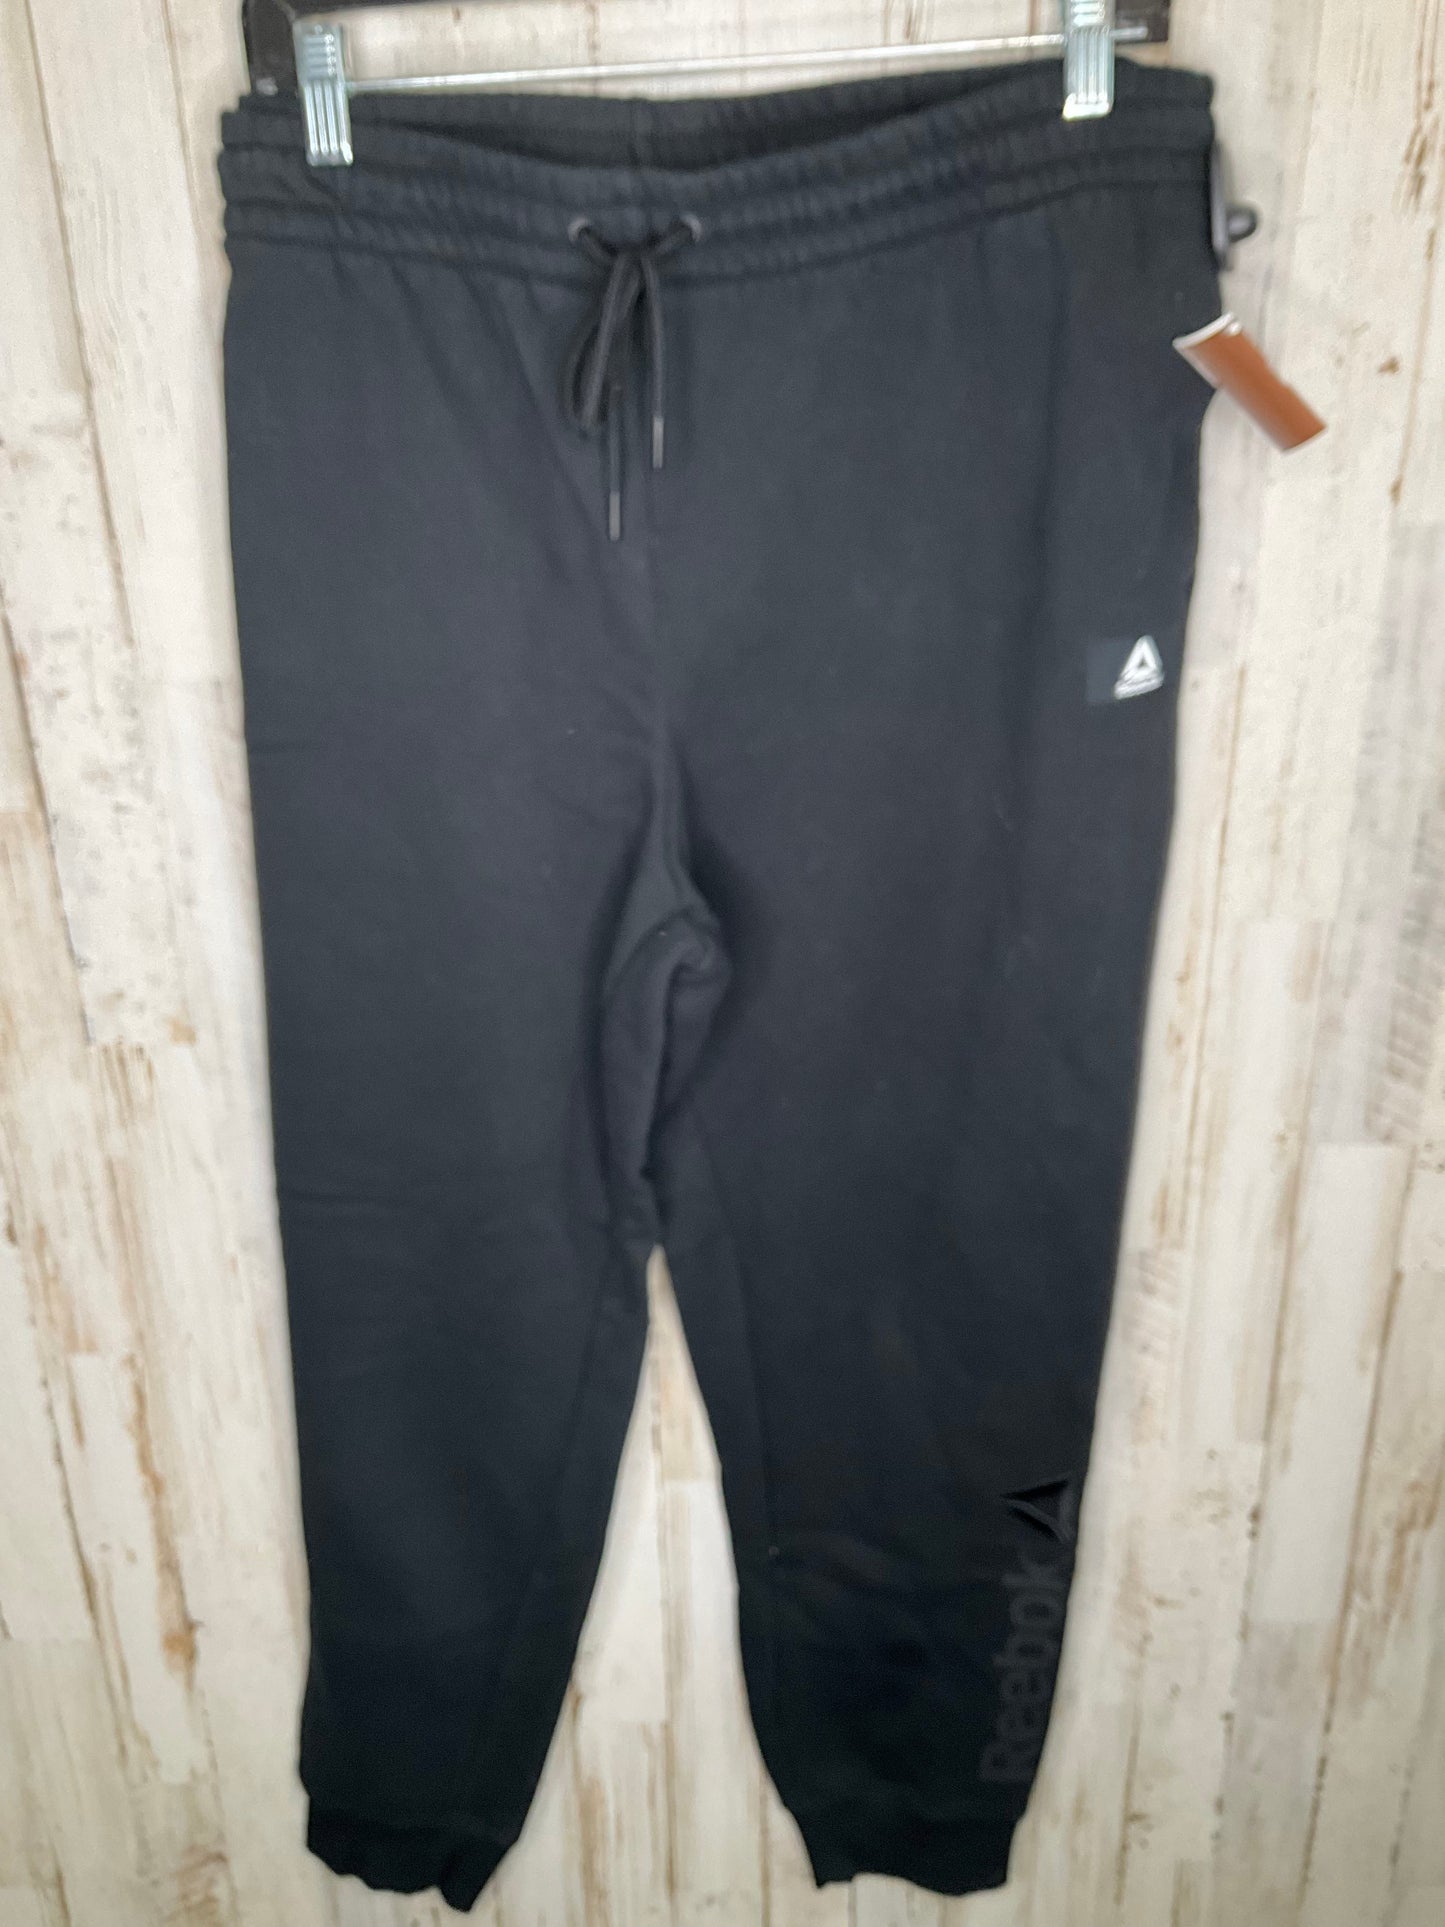 Athletic Pants By Reebok  Size: Xxl